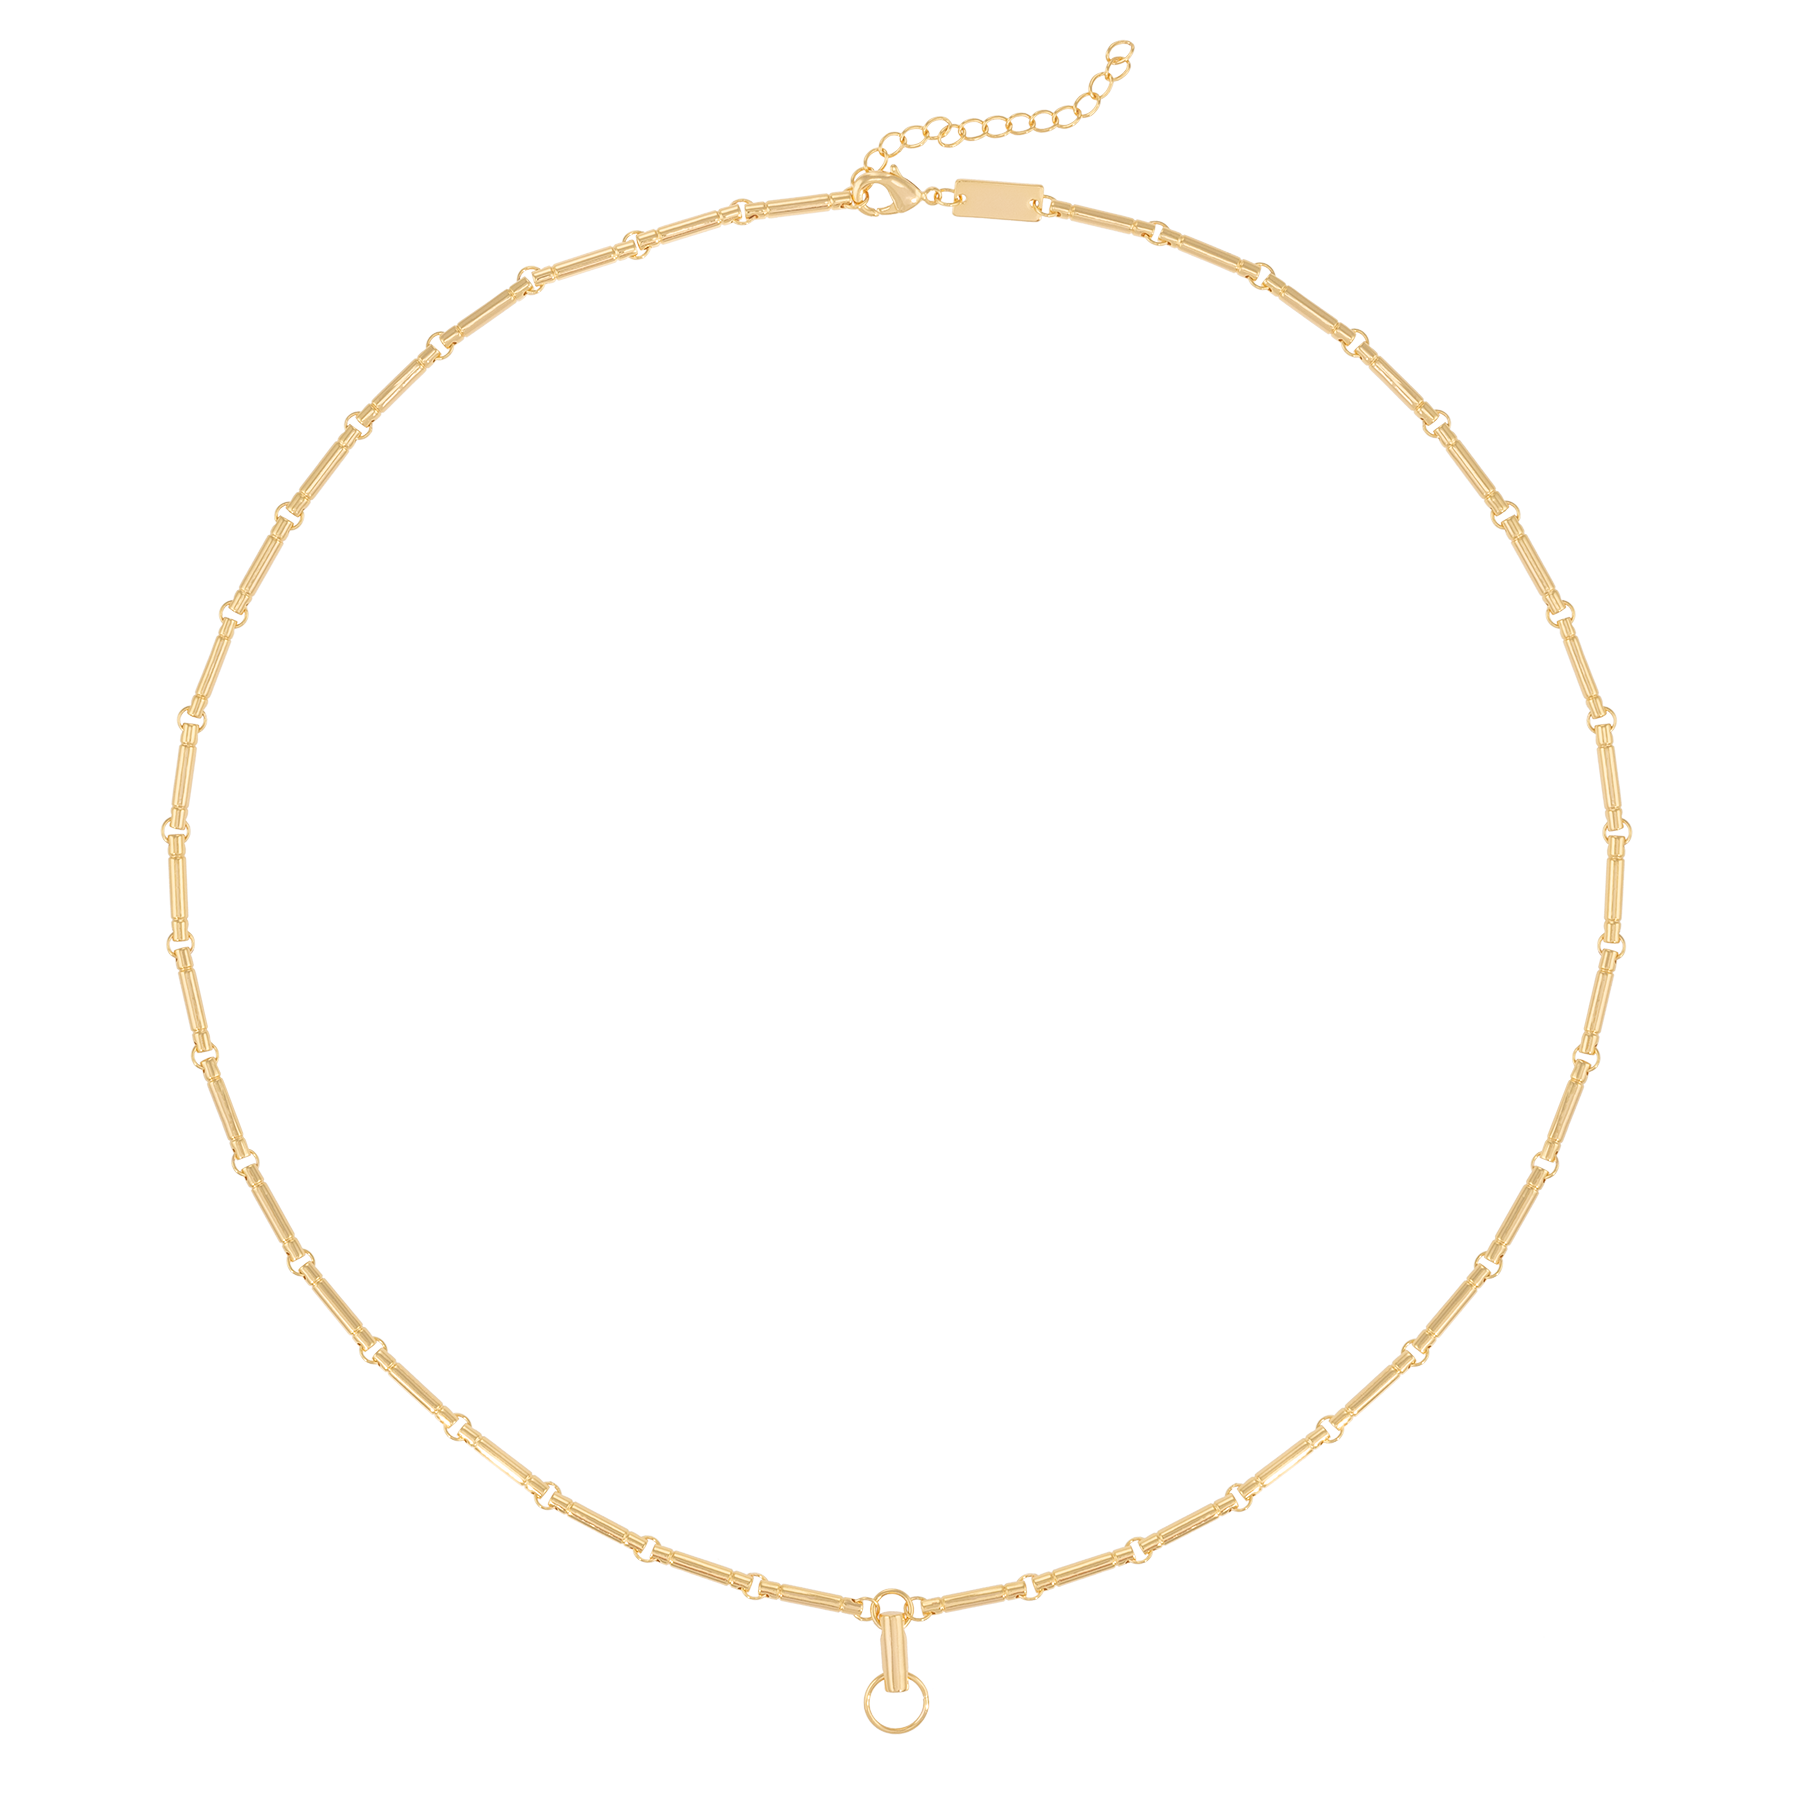 Image of Maja necklace 60-65 cm from Emilia by Bon Dep